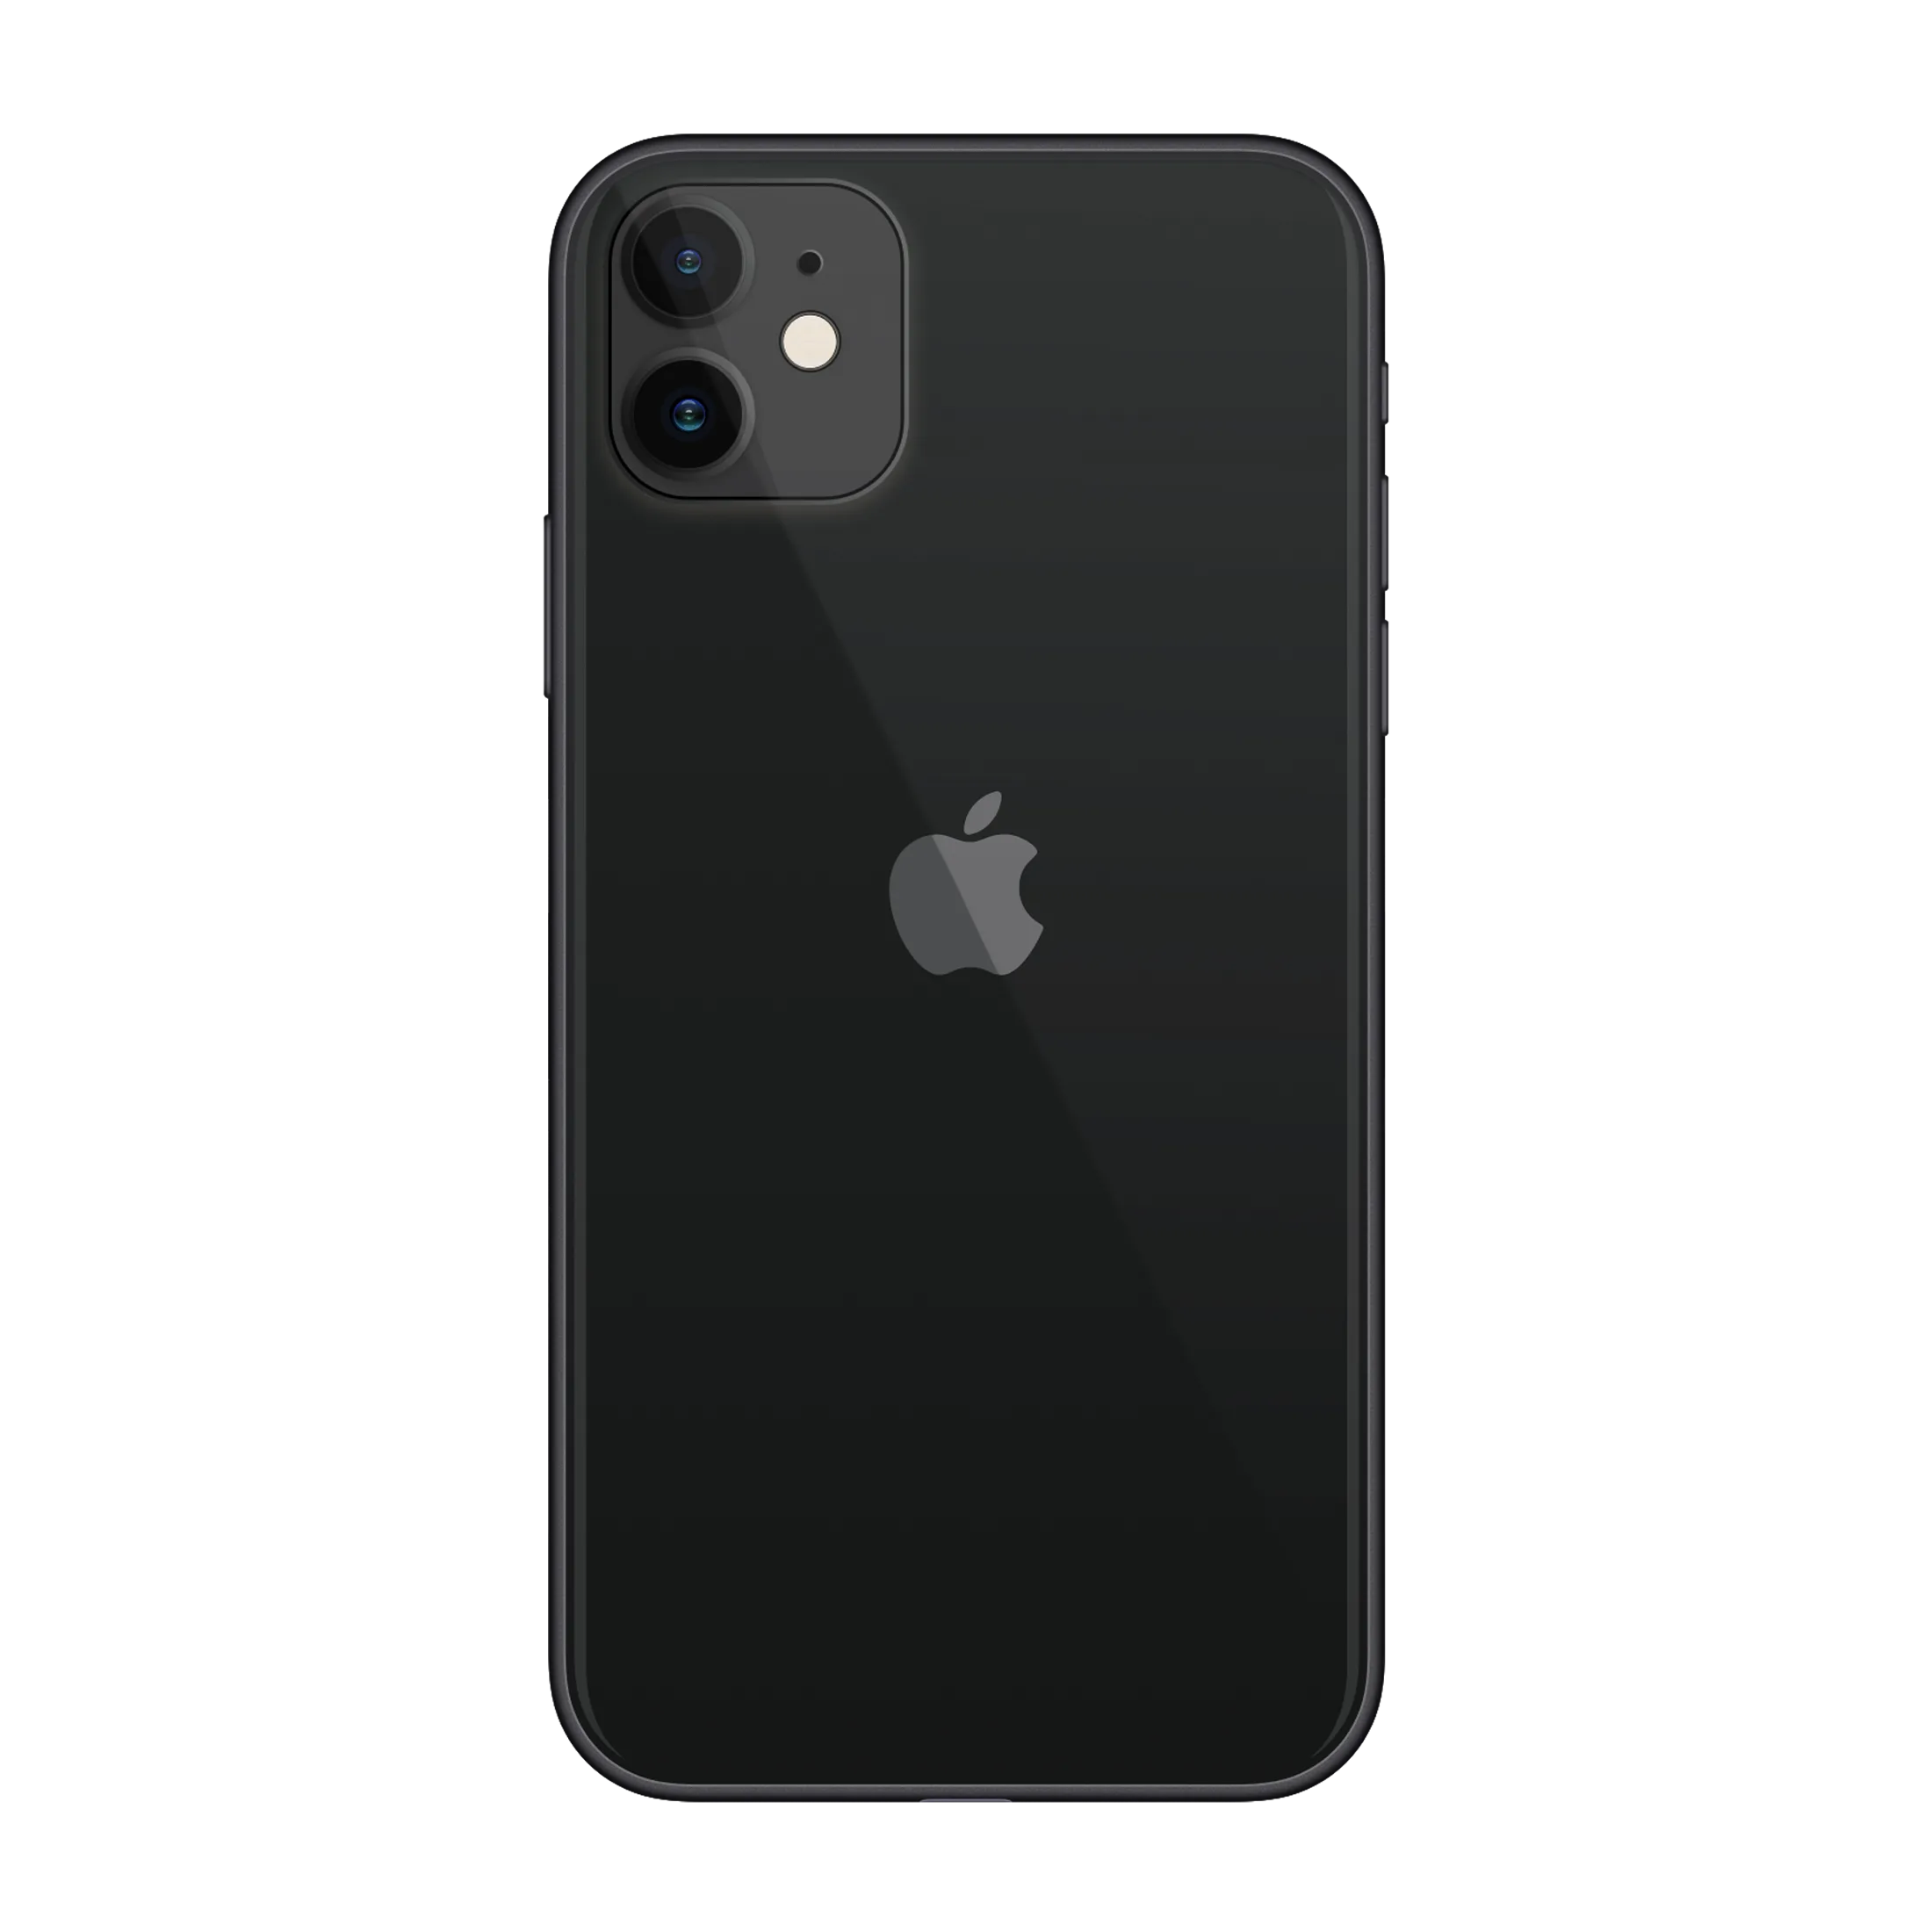 Айфон 11 набережные челны. Apple iphone 11 64 ГБ черный. Apple iphone 11 64gb Black. Apple iphone 11 128gb Black. Iphone 11, 64 ГБ, чёрный.